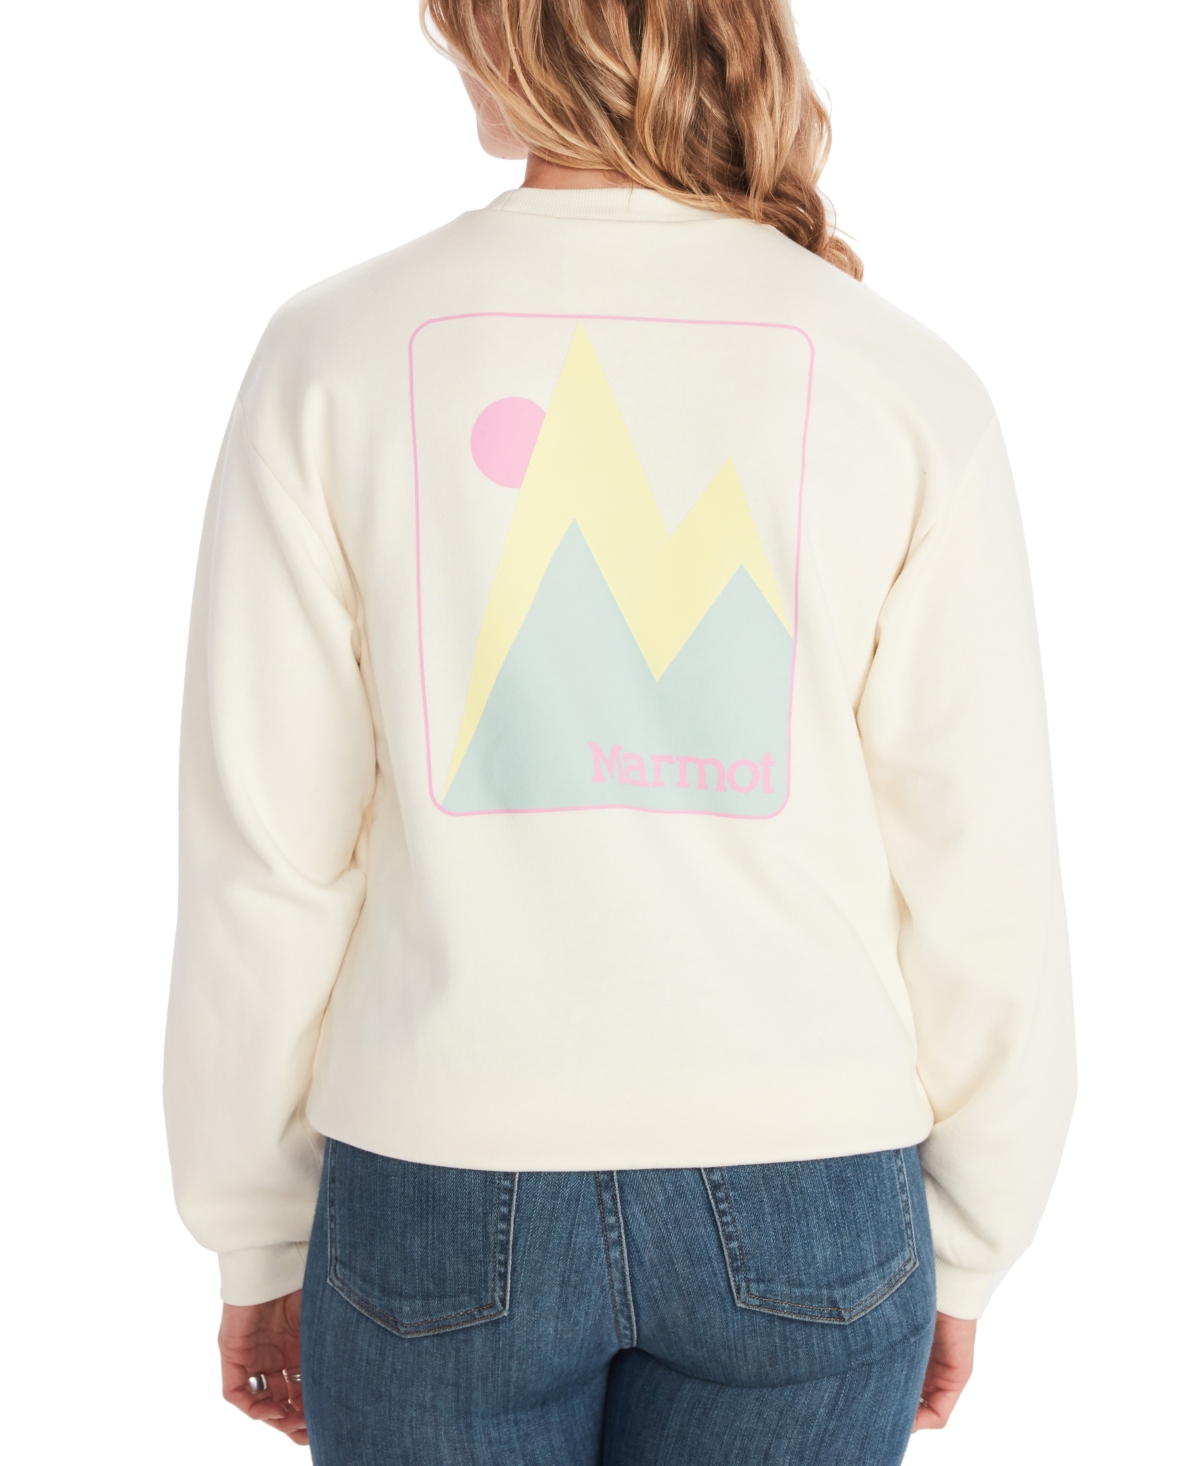 Marmot Women's Twin Peak Crewneck Sweatshirt